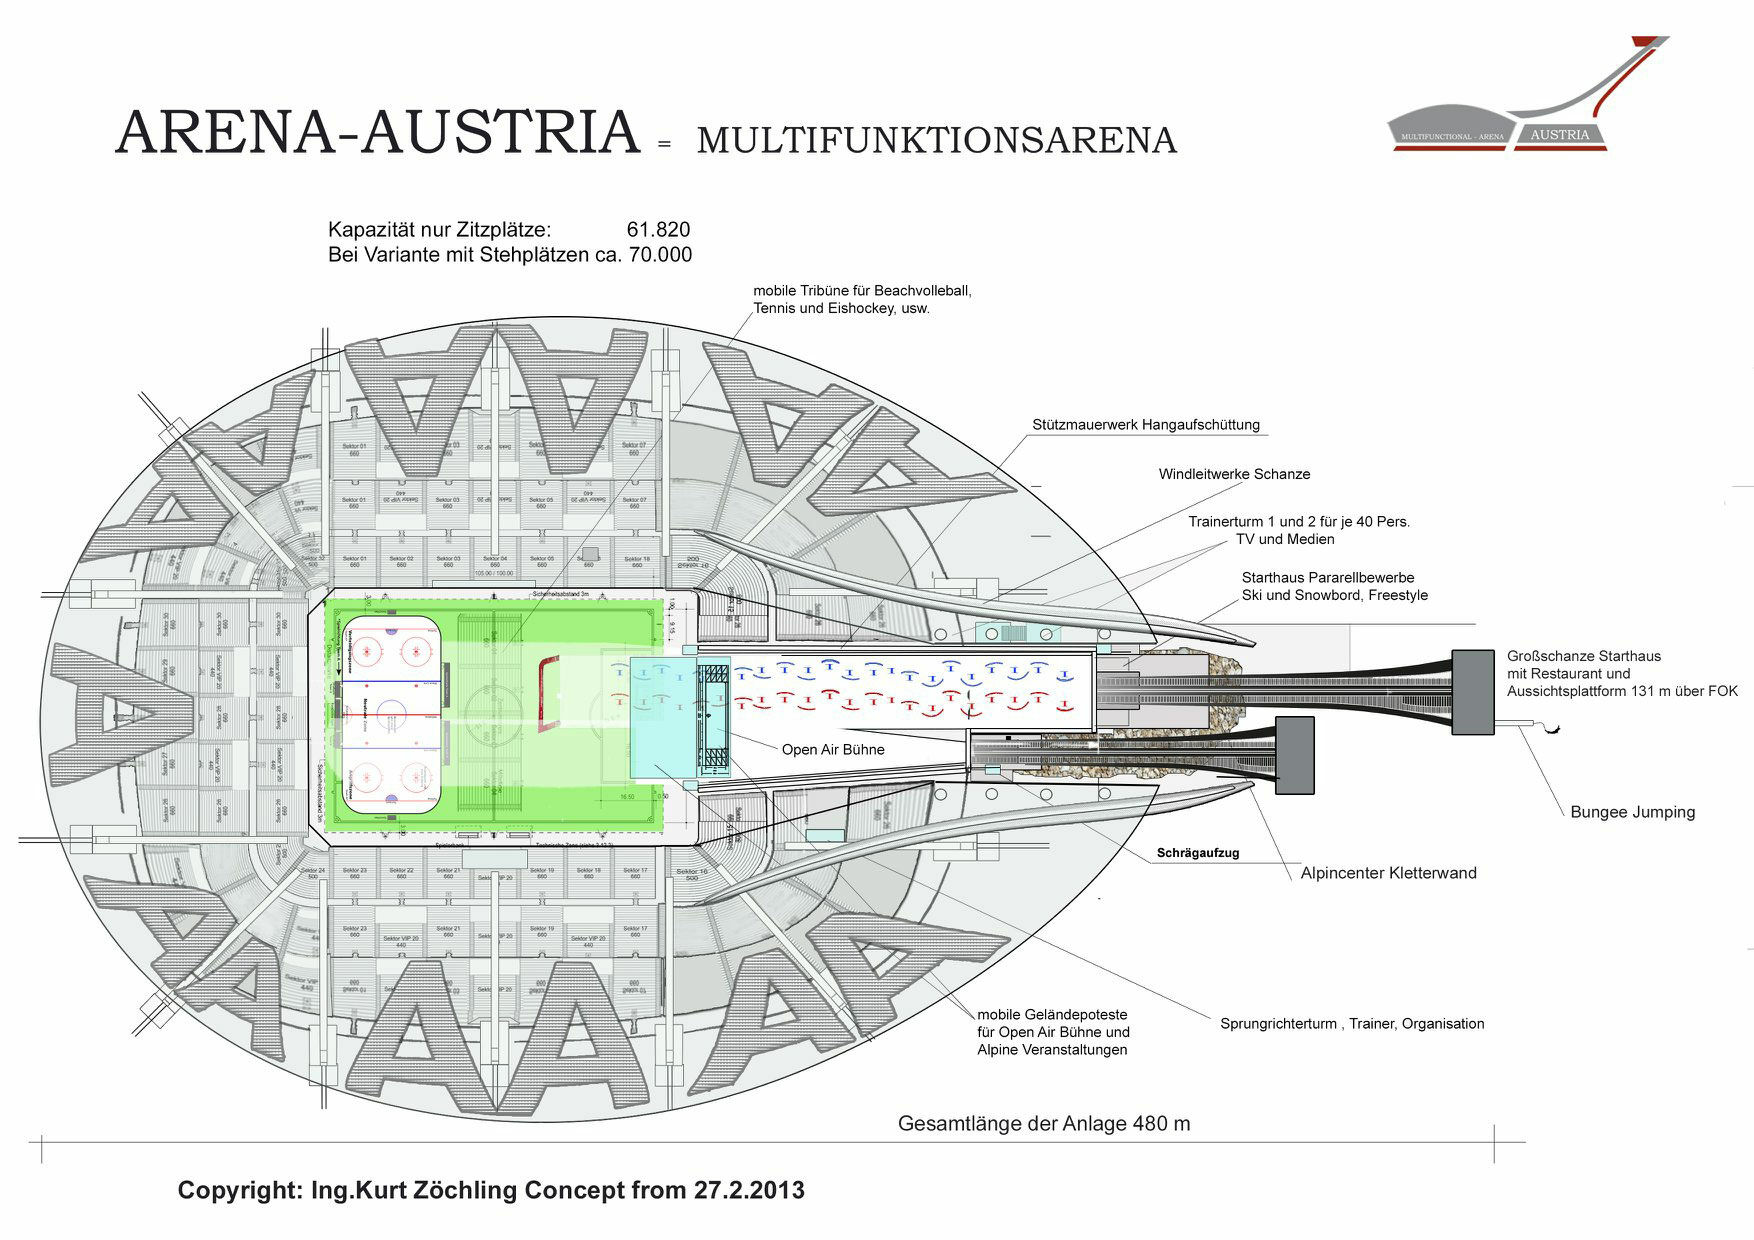 Zoechling_Arena-Austria-2_b648f_x_0x0.jpg